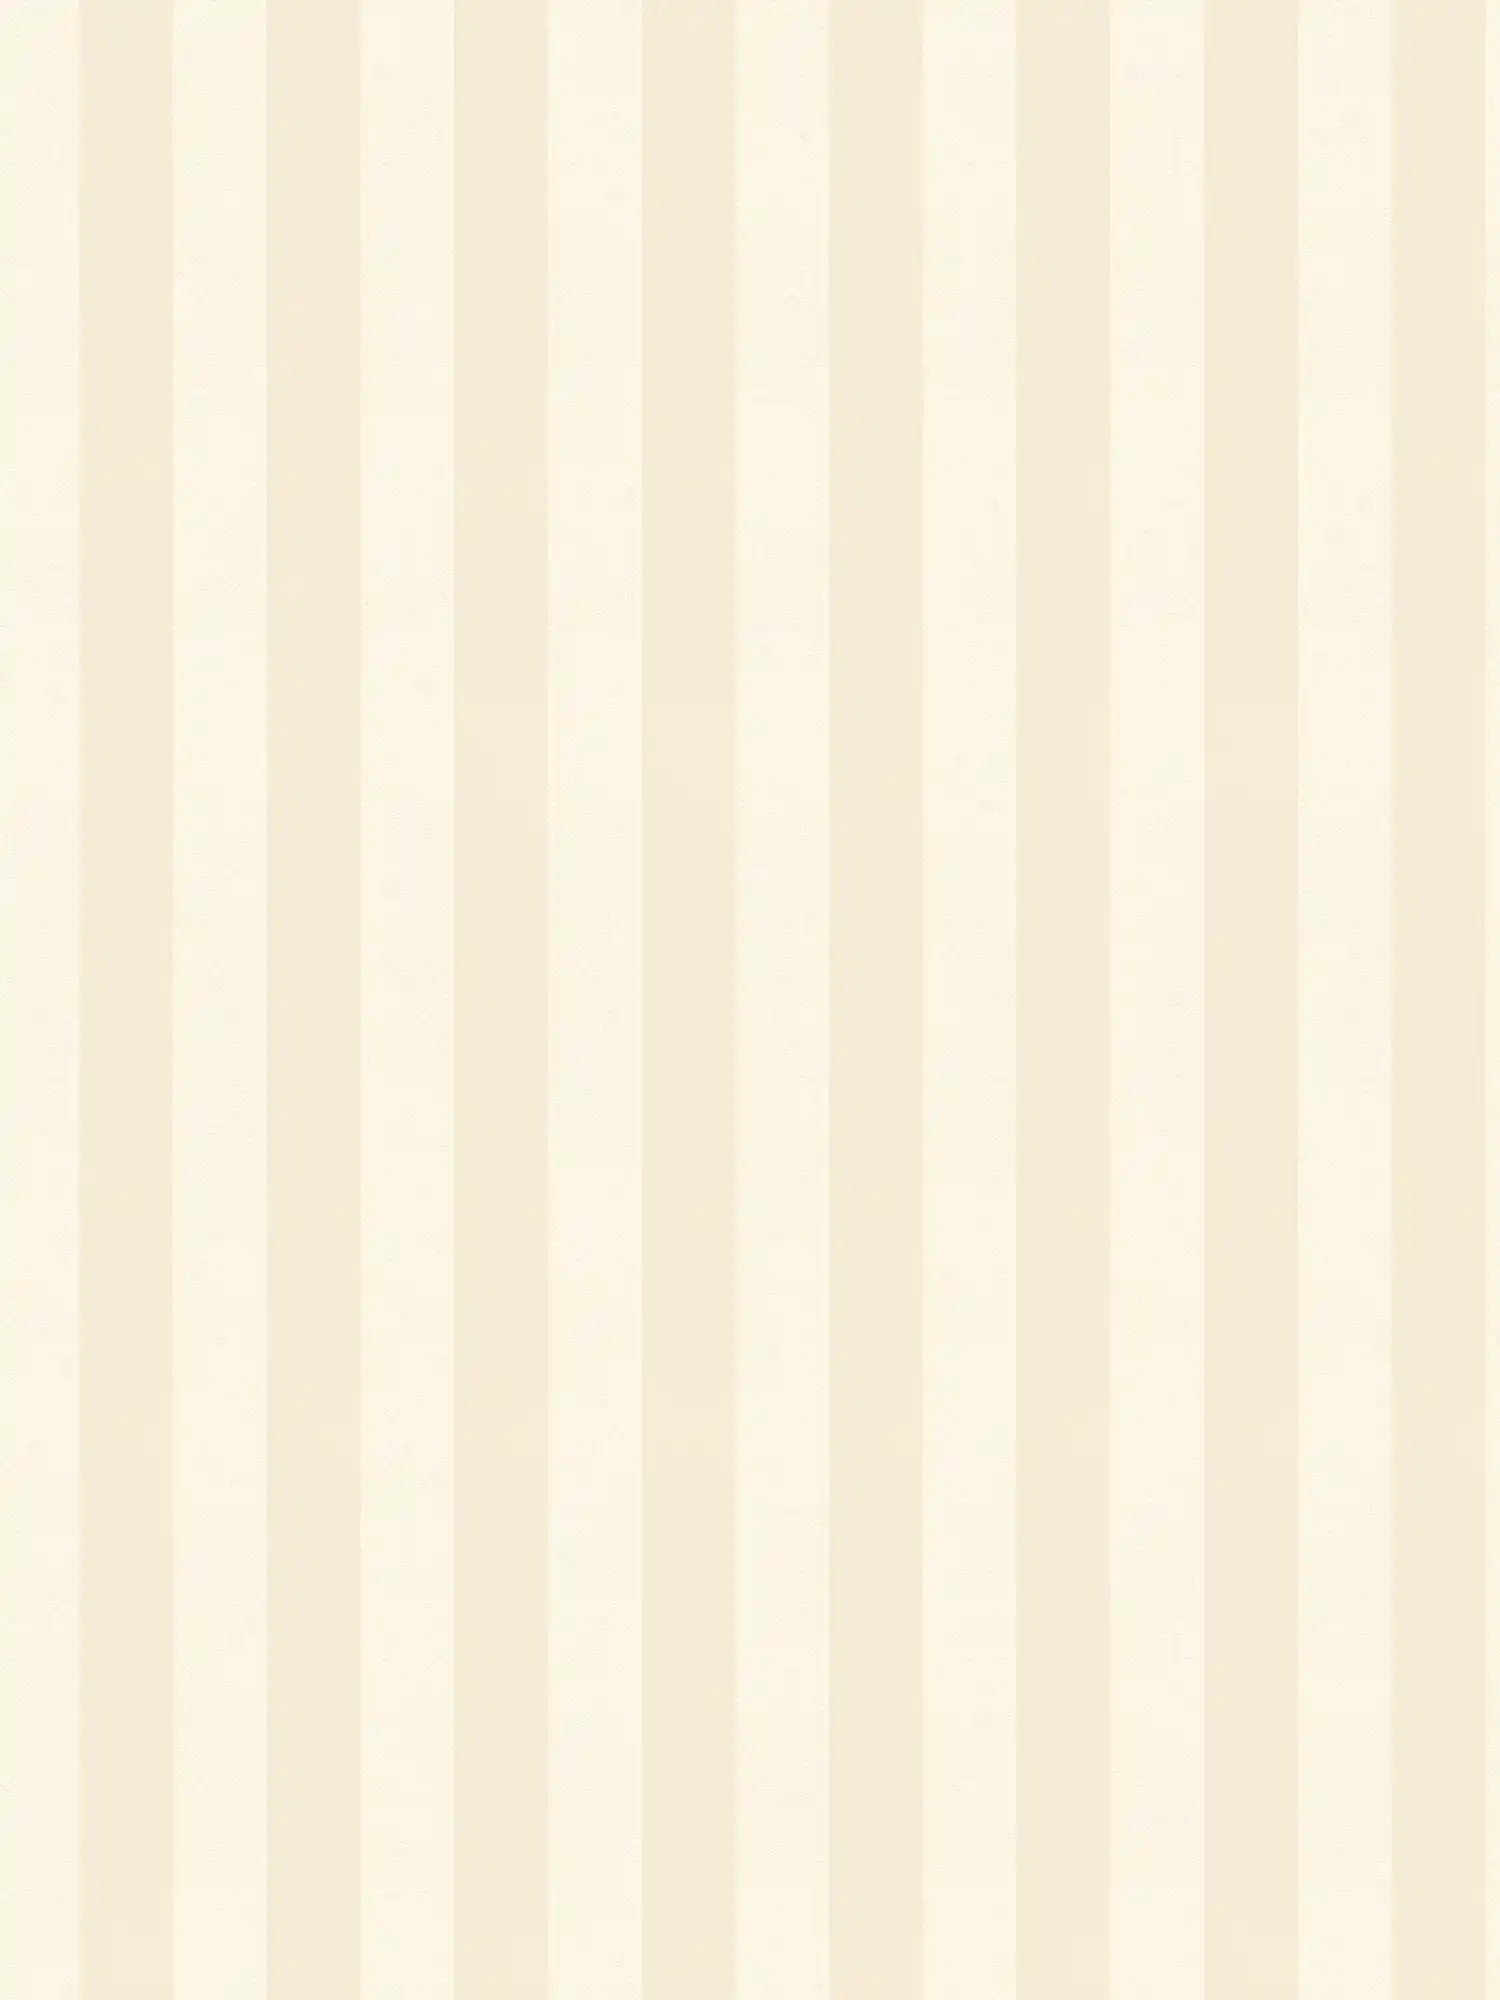 Streepjesbehang met patroon in licht crème - beige, crème
